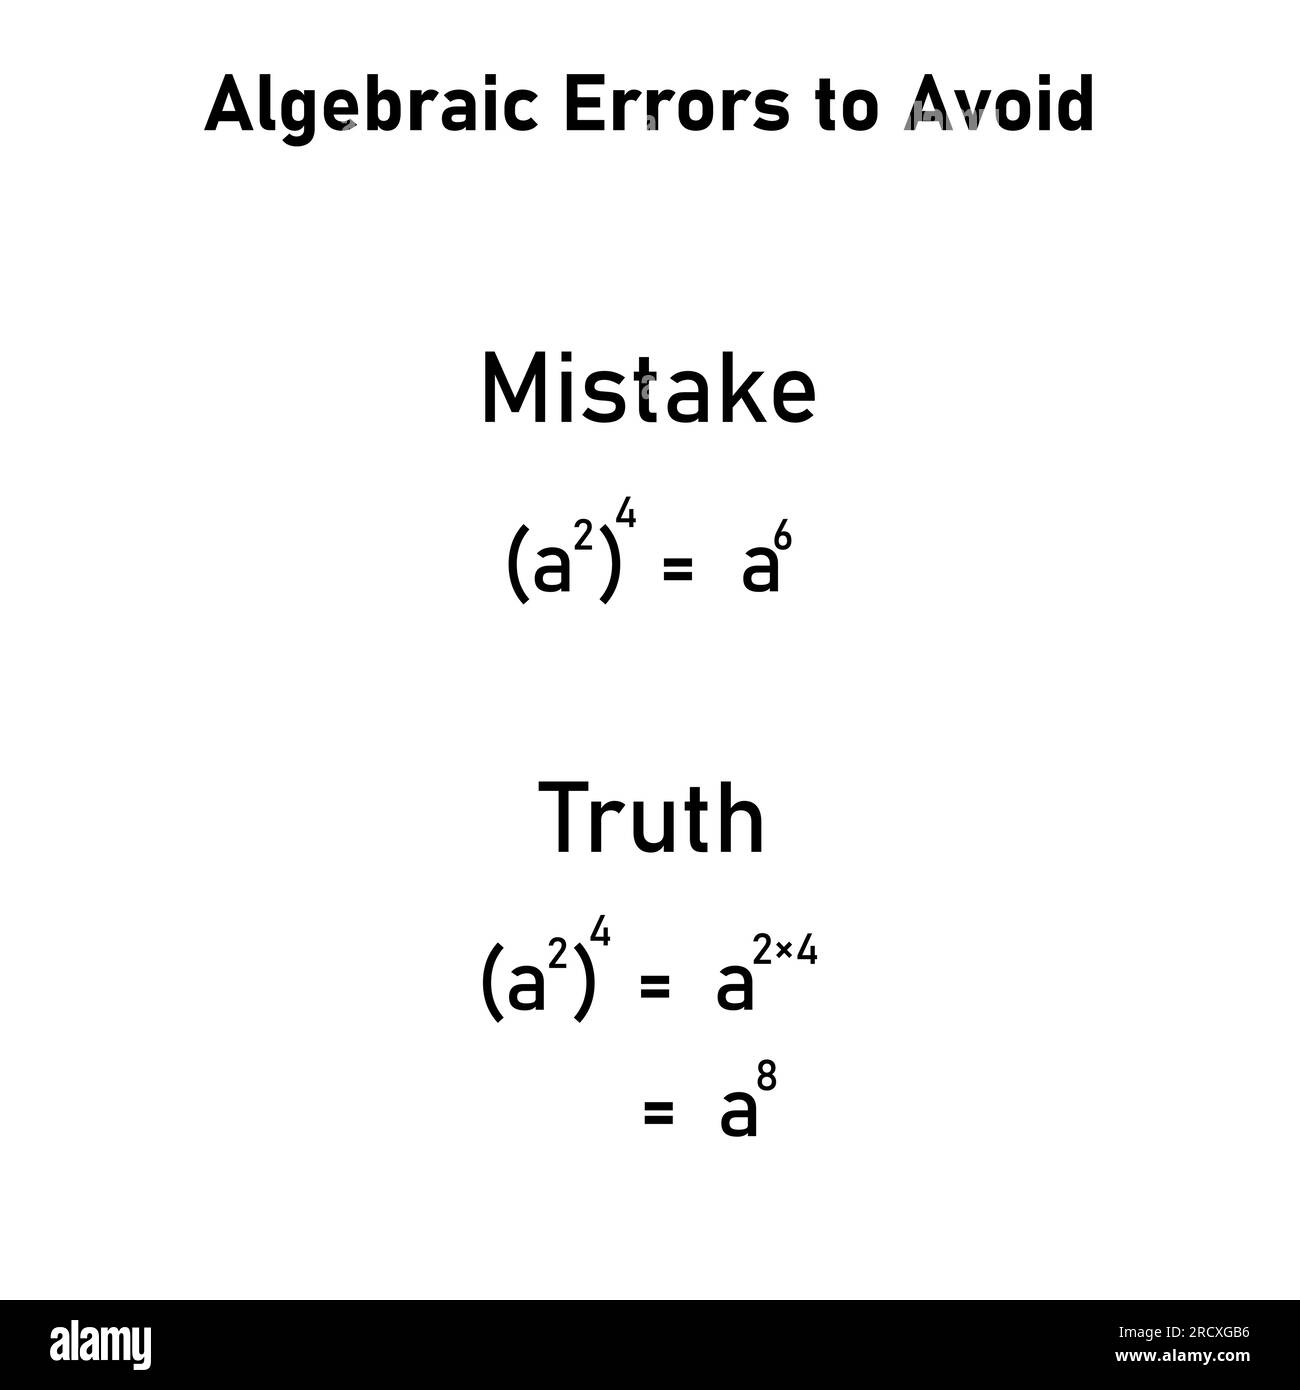 Mathematics errors problems and solutions. Algebra errors to avoid in mathematics. Common mistakes in math. Common algebra errors with solving. Stock Vector